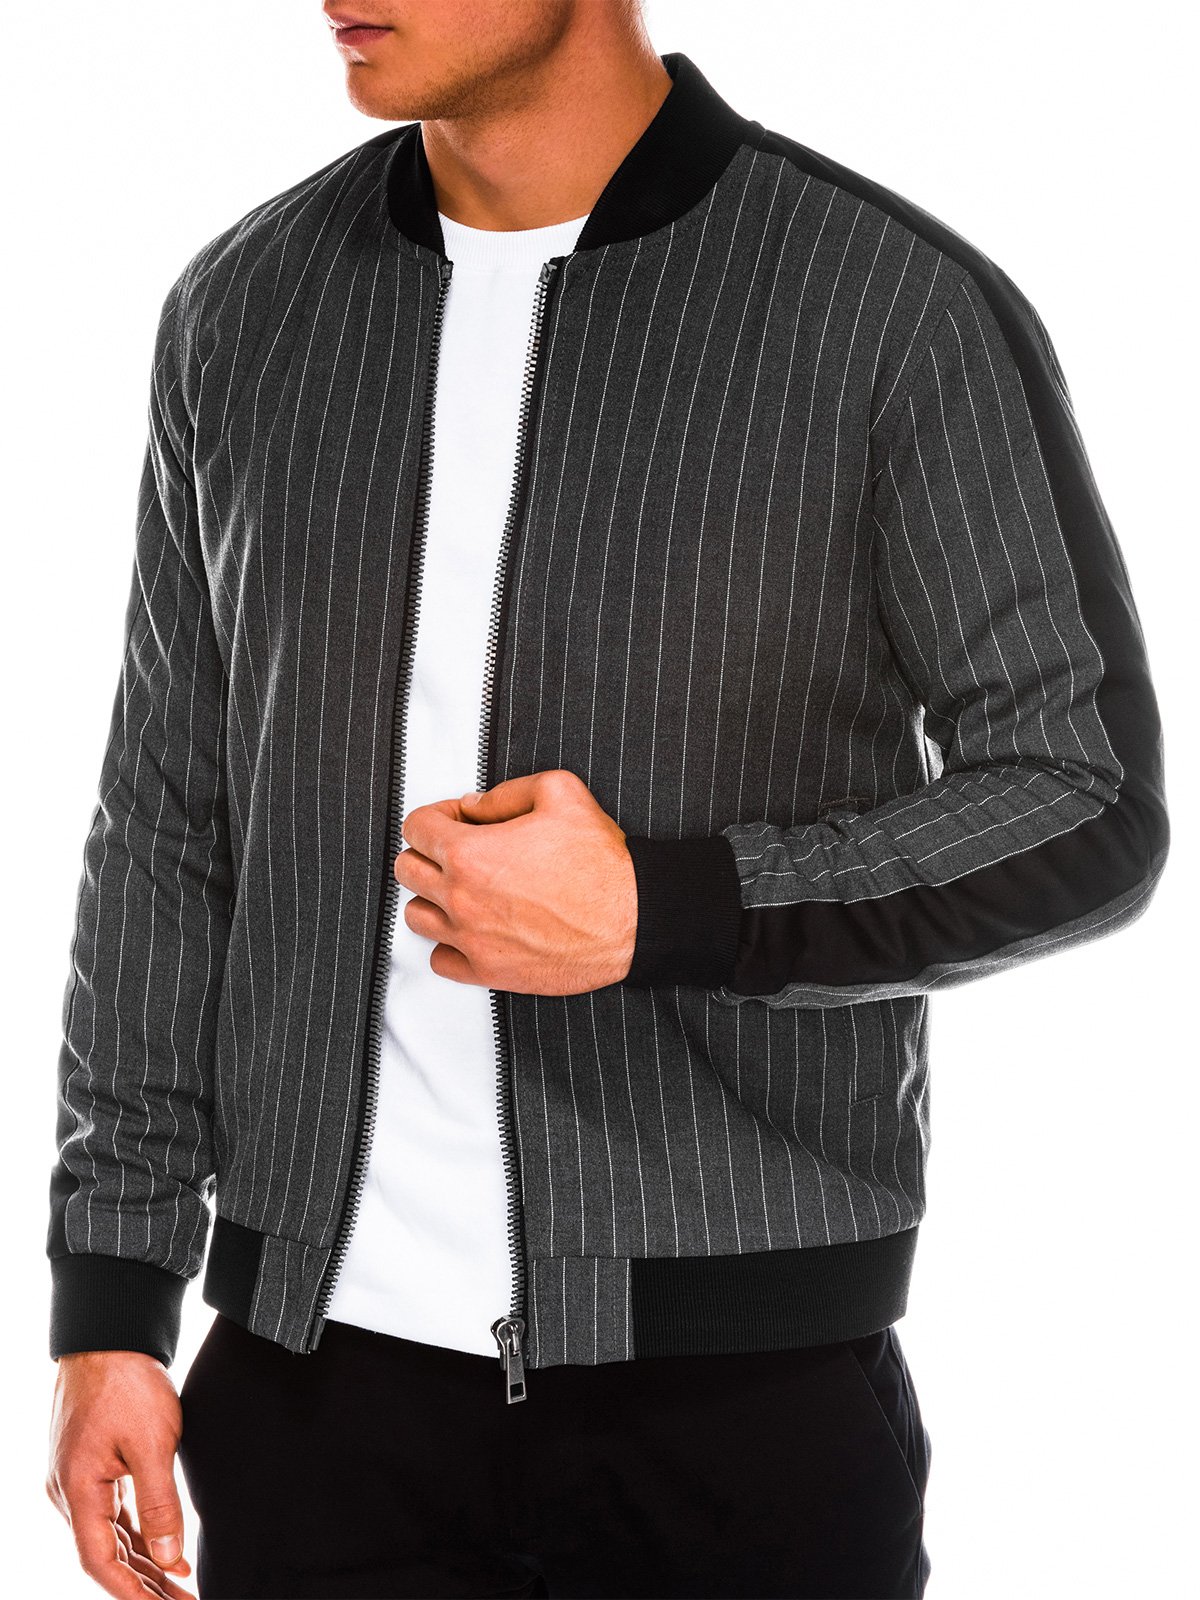 Men's mid- season bomber jacket C423 - dark grey | MODONE wholesale ...